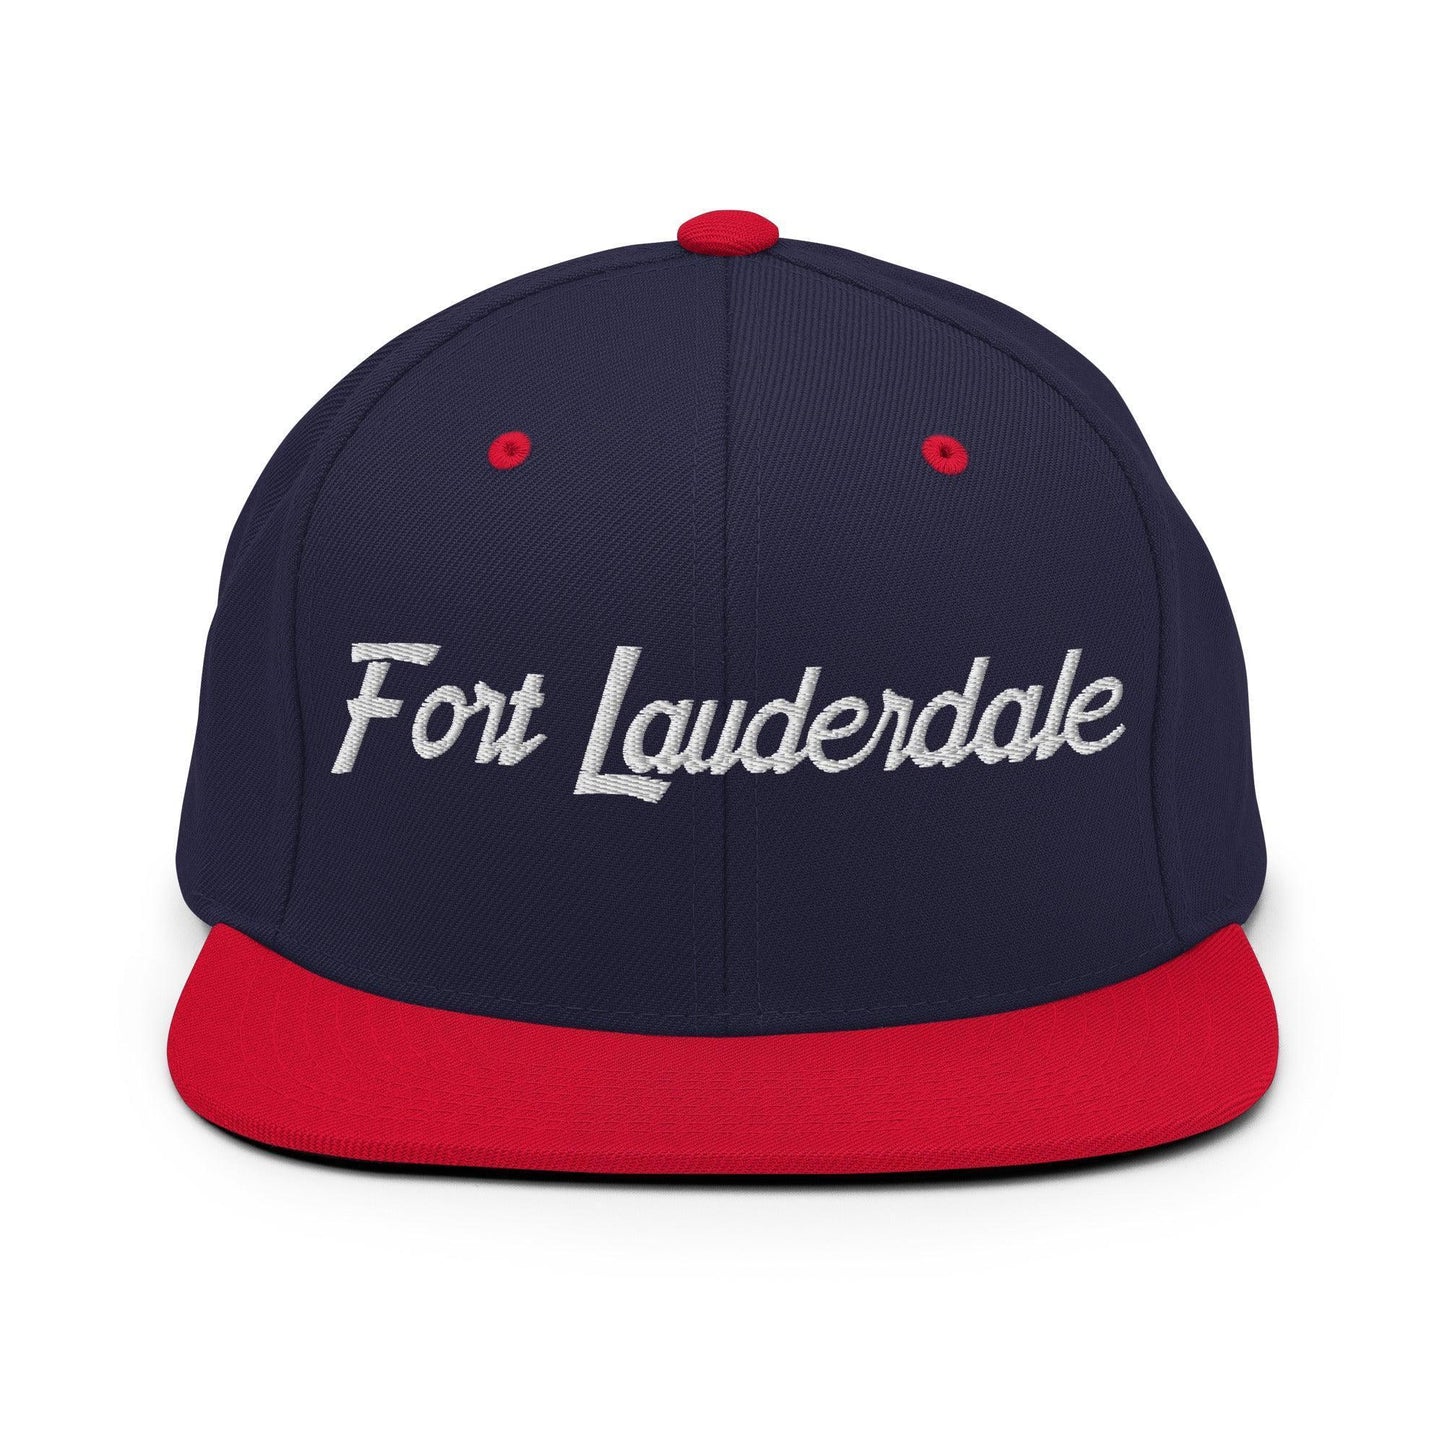 Fort Lauderdale Script Snapback Hat Navy Red